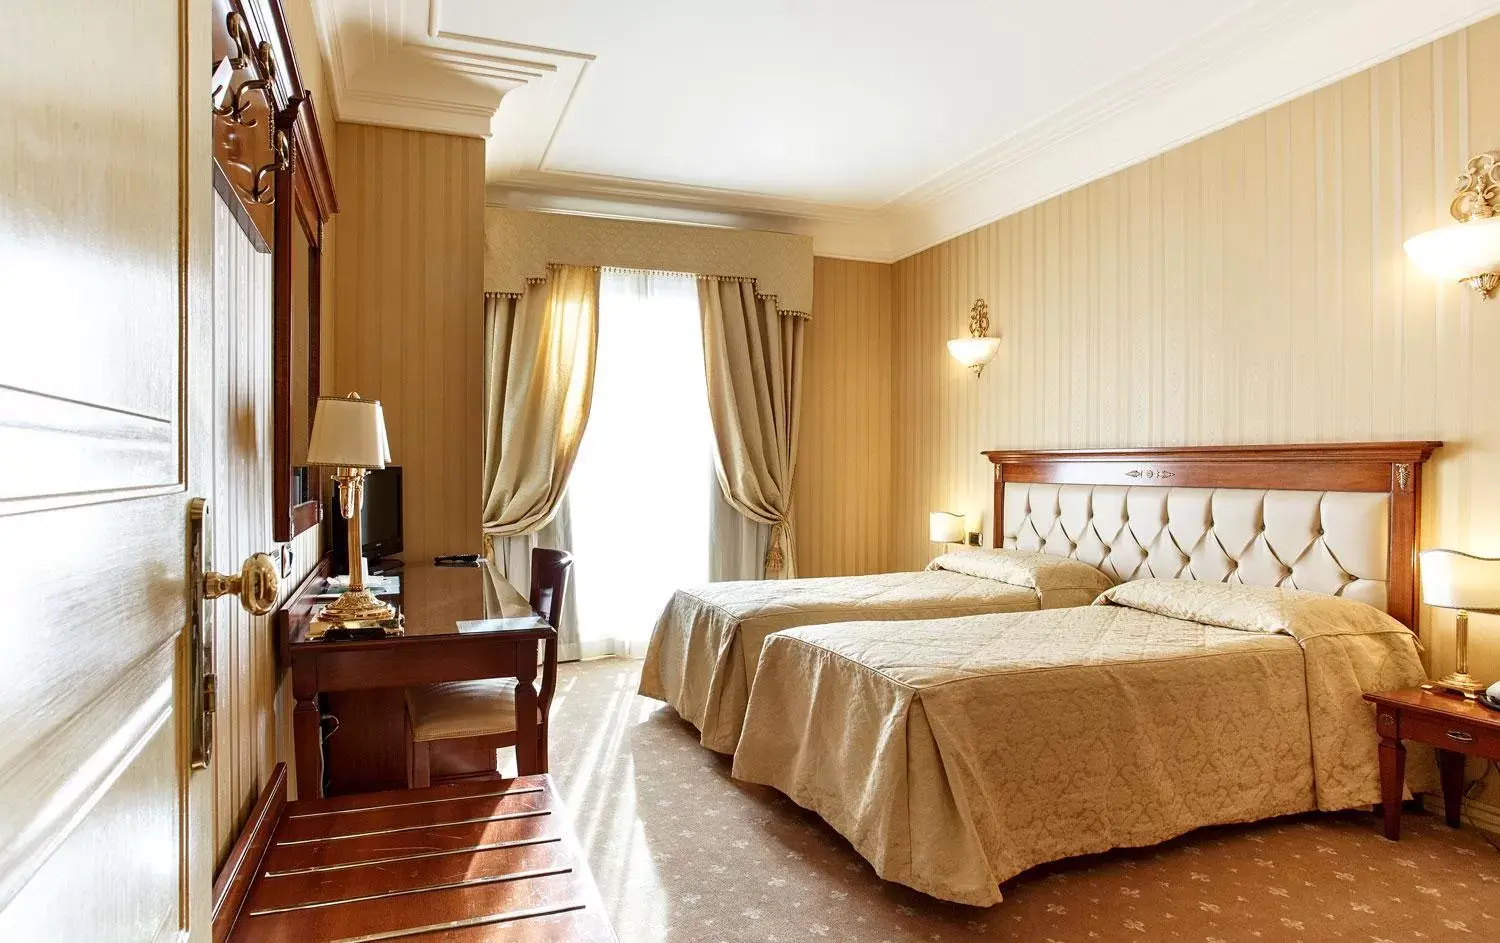 Bed, Room Photo in Hotel Ristorante Paradise